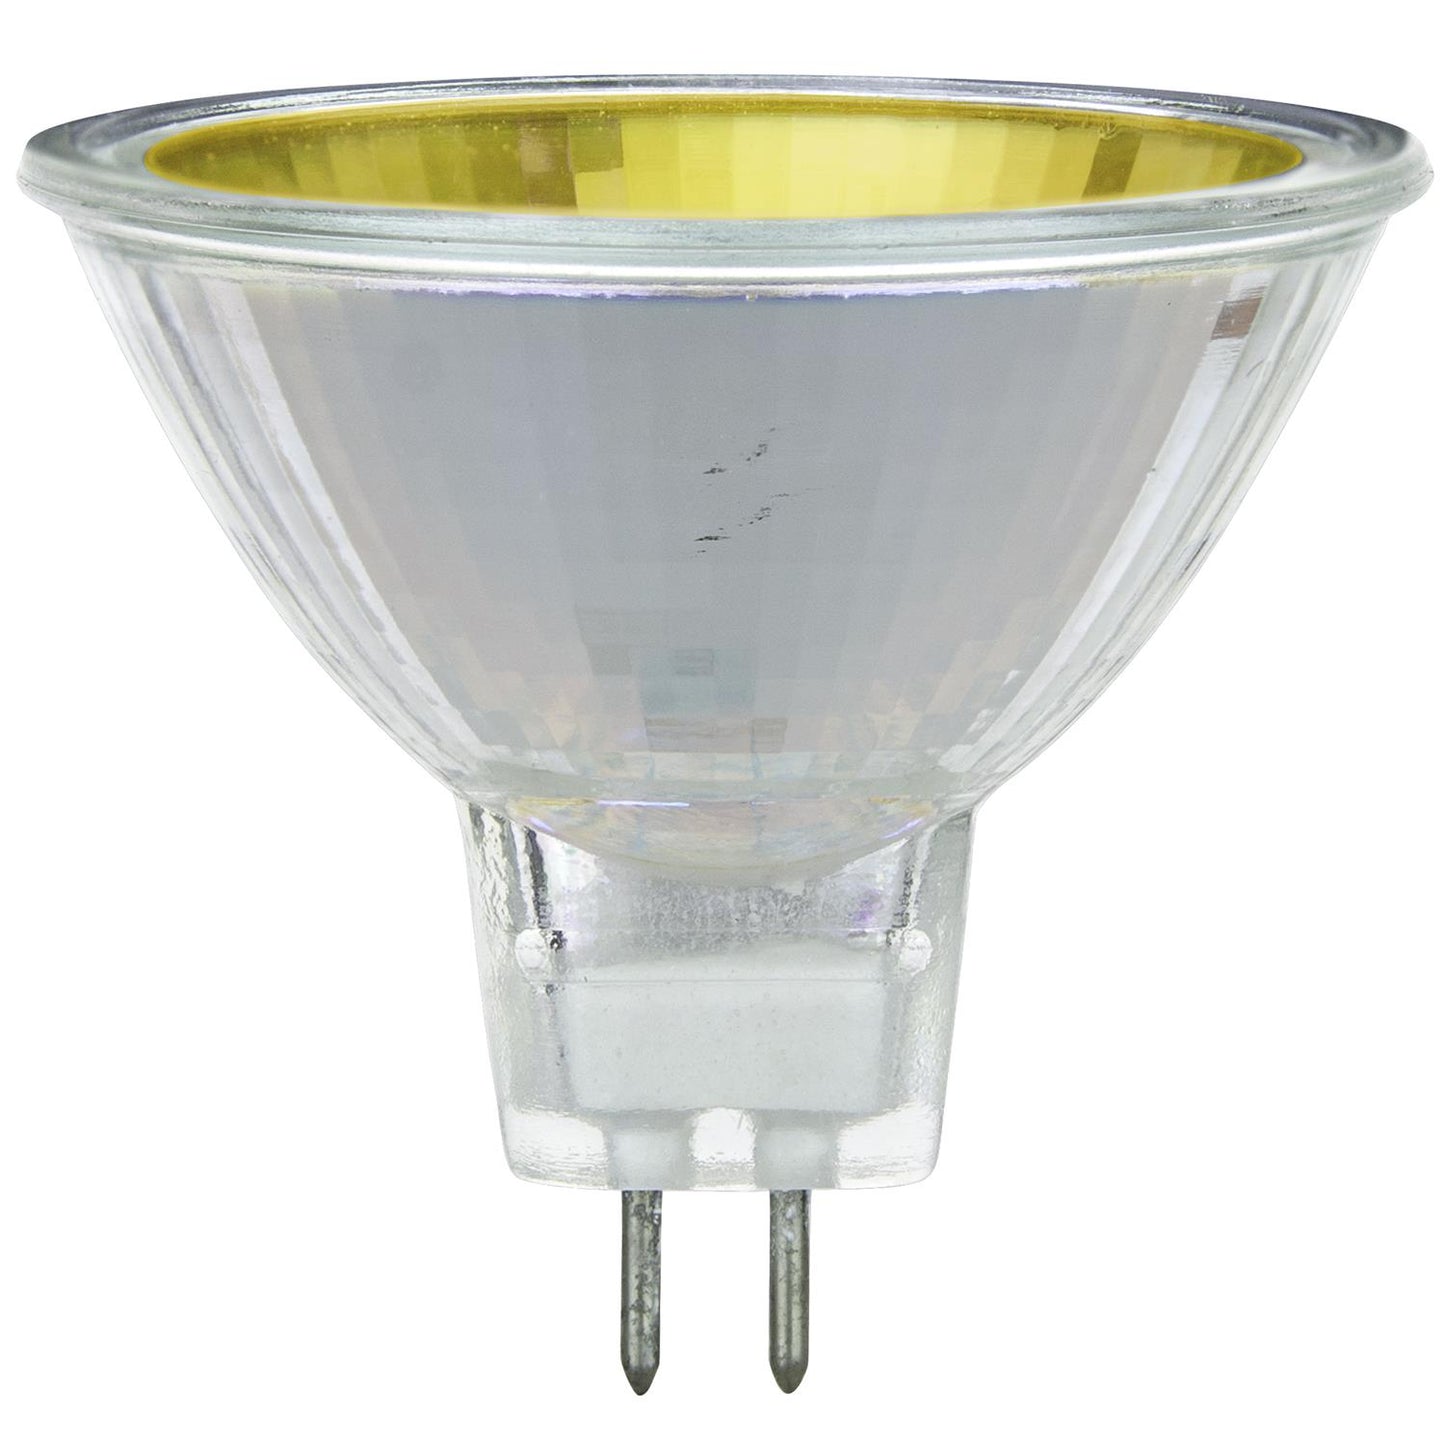 Sunlite 50MR16/NSP/12V/B Color MR16 12° Narrow Spot Halogen Light Bulb, 50-Watt, 12-Volt, GU5.3 2-Pin Base, Cover Glass, Dimmable, 2,000 Hour Life Span, Yellow (24 Pack)